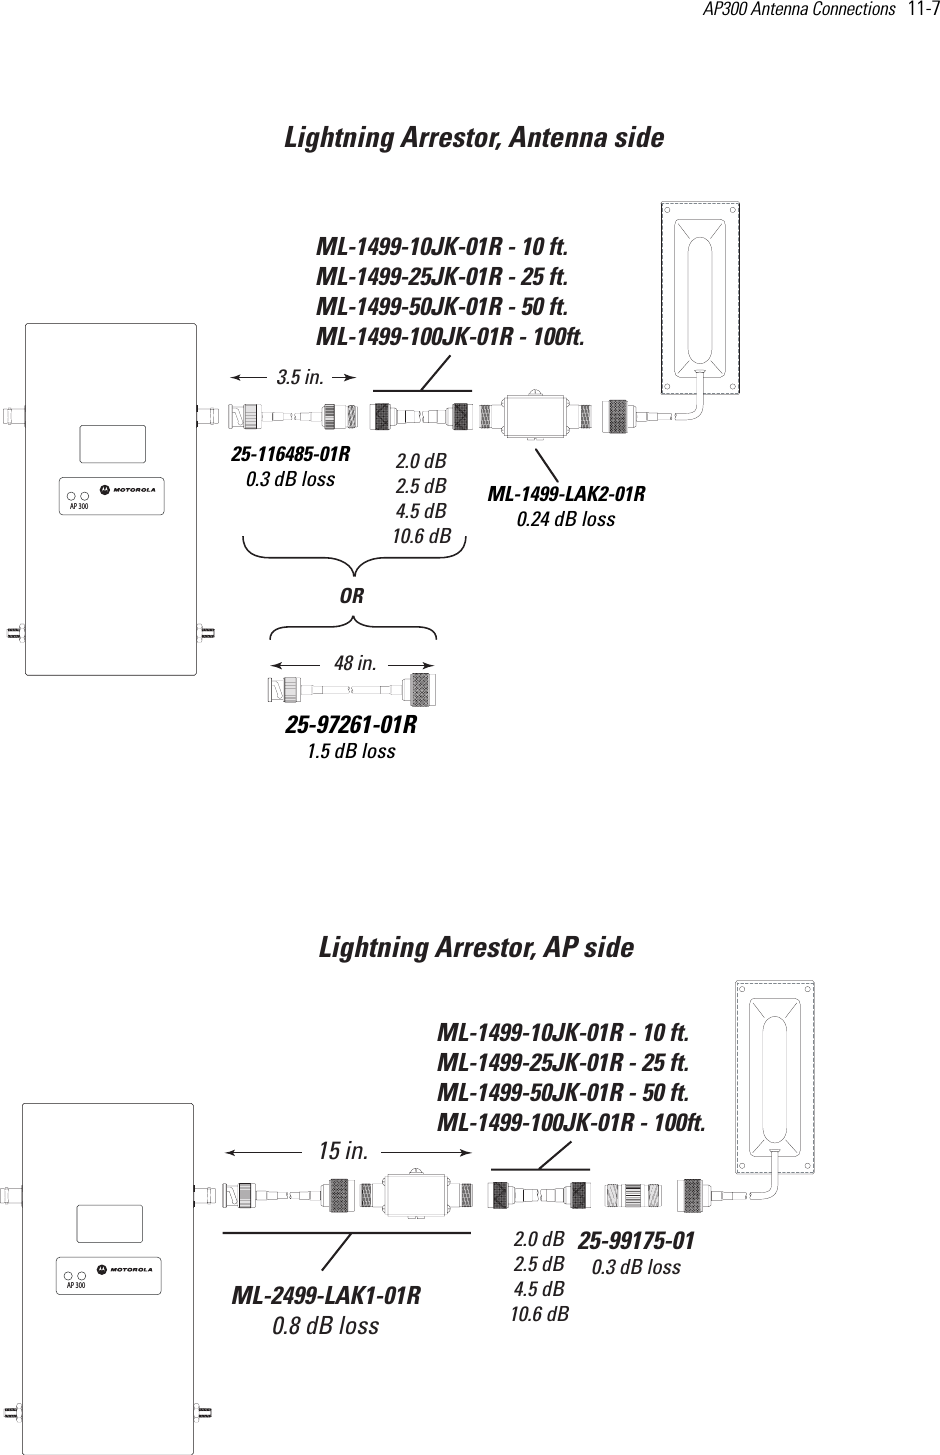 AP300 Antenna Connections   11-7 Lightning Arrestor, AP sideLightning Arrestor, Antenna sideML-1499-10JK-01R - 10 ft.ML-1499-25JK-01R - 25 ft.ML-1499-50JK-01R - 50 ft.ML-1499-100JK-01R - 100ft. 2.0 dB2.5 dB4.5 dB10.6 dB25-97261-01R1.5 dB loss48 in.ORML-1499-LAK2-01R0.24 dB loss25-99175-010.3 dB lossML-2499-LAK1-01R0.8 dB loss15 in.ML-1499-10JK-01R - 10 ft.ML-1499-25JK-01R - 25 ft.ML-1499-50JK-01R - 50 ft.ML-1499-100JK-01R - 100ft. 2.0 dB2.5 dB4.5 dB10.6 dBAP 300AP 30025-116485-01R0.3 dB loss3.5 in.